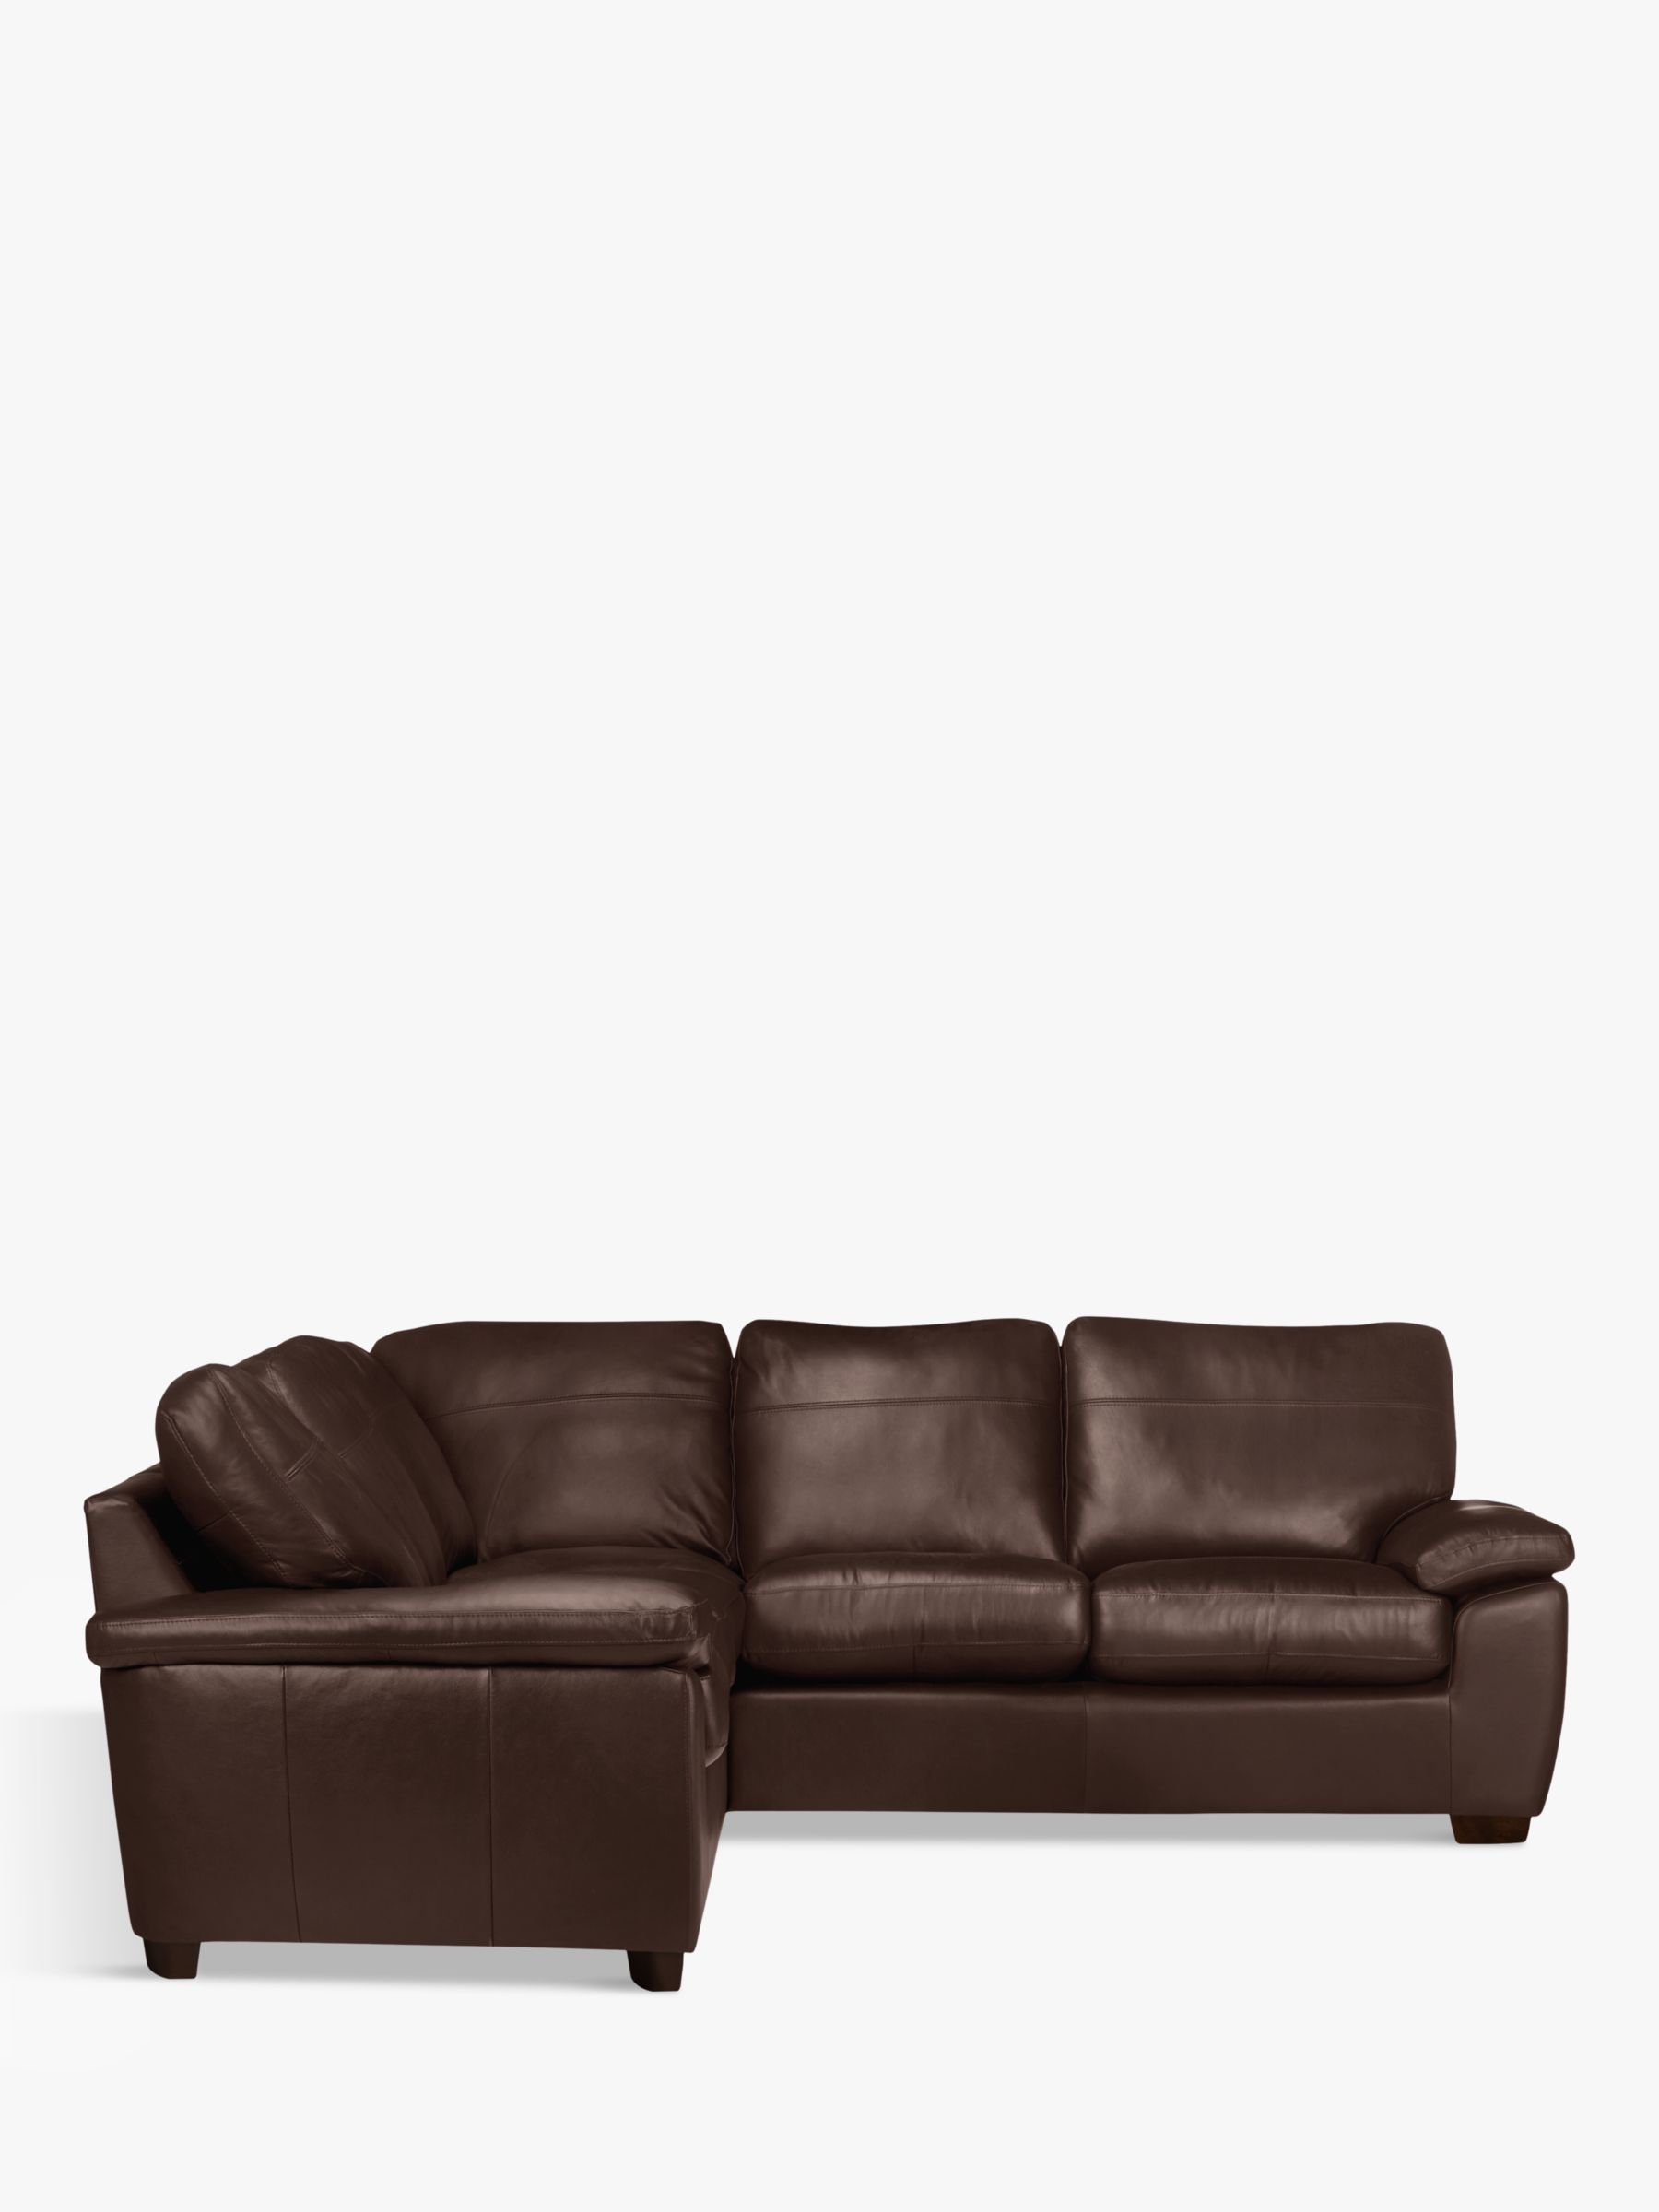 Seater Leather Corner Sofa